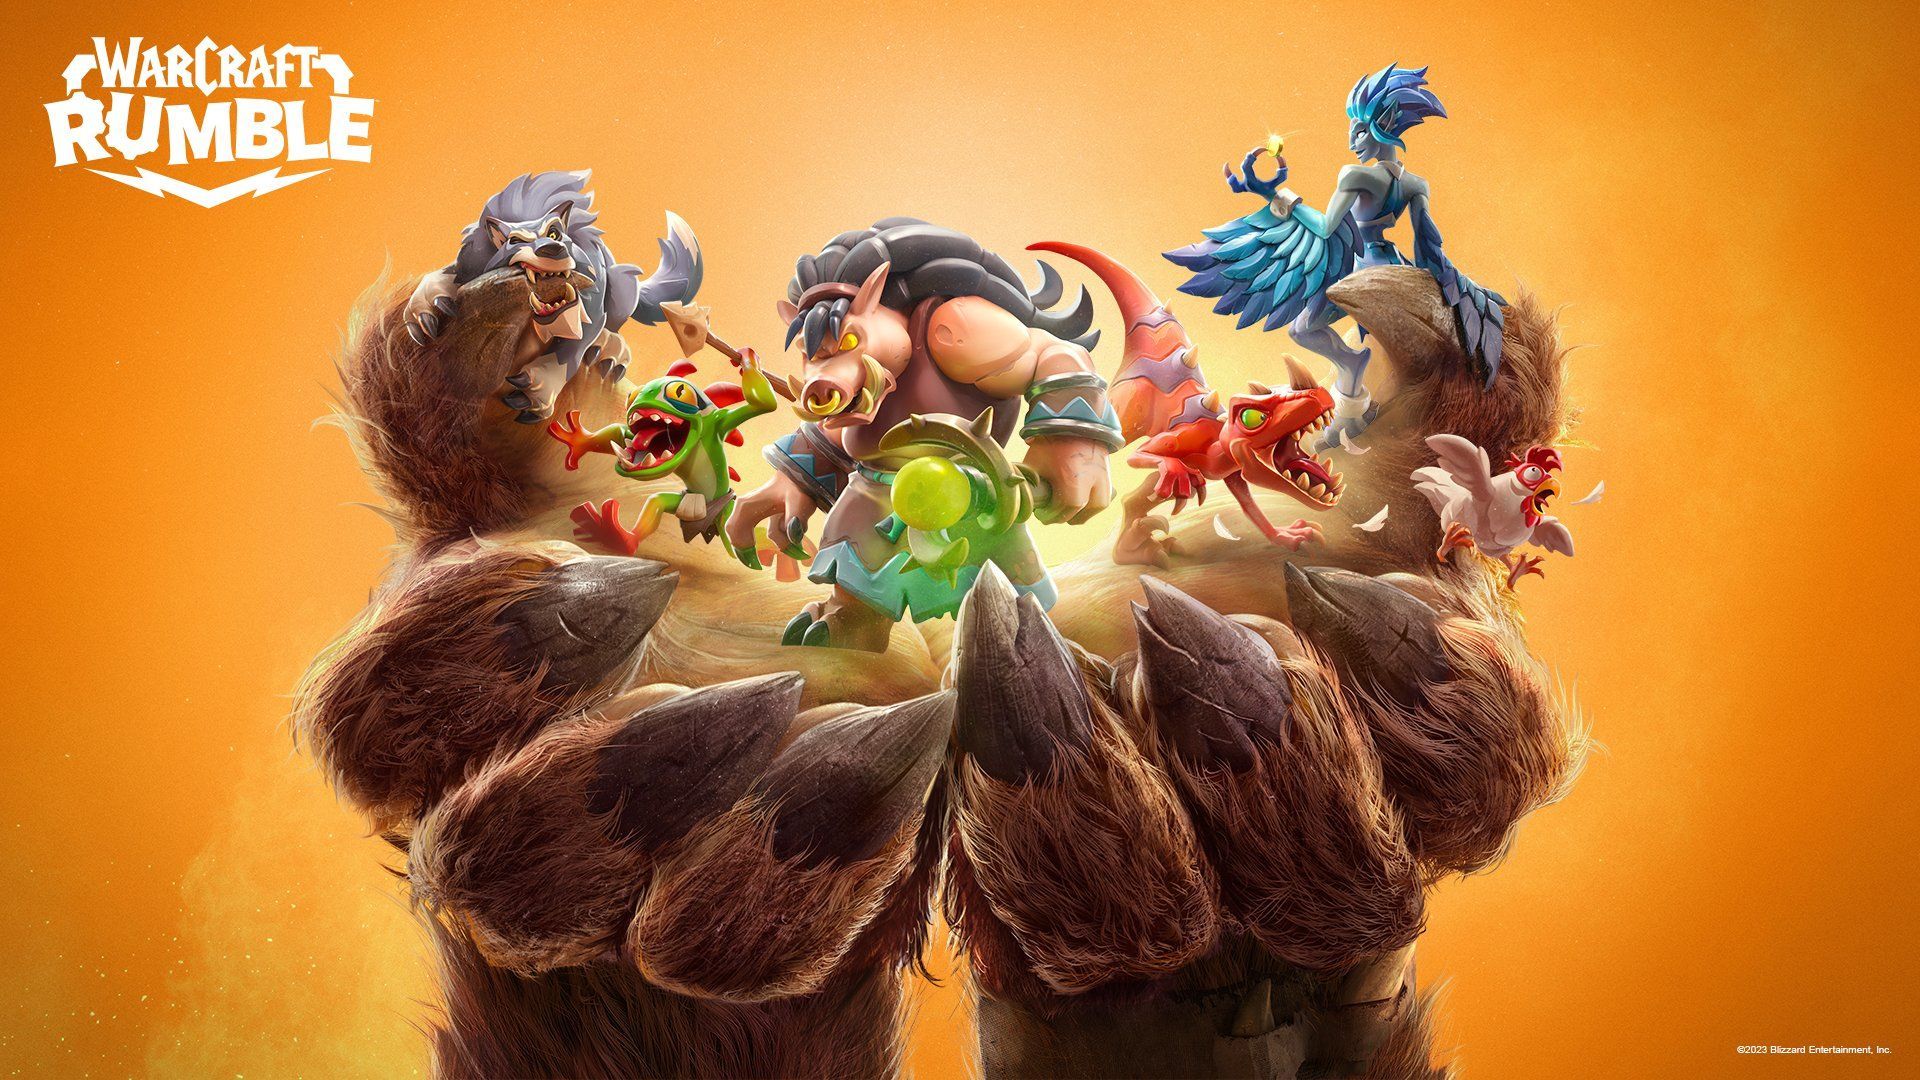 Warcraft Rumble leader tier list